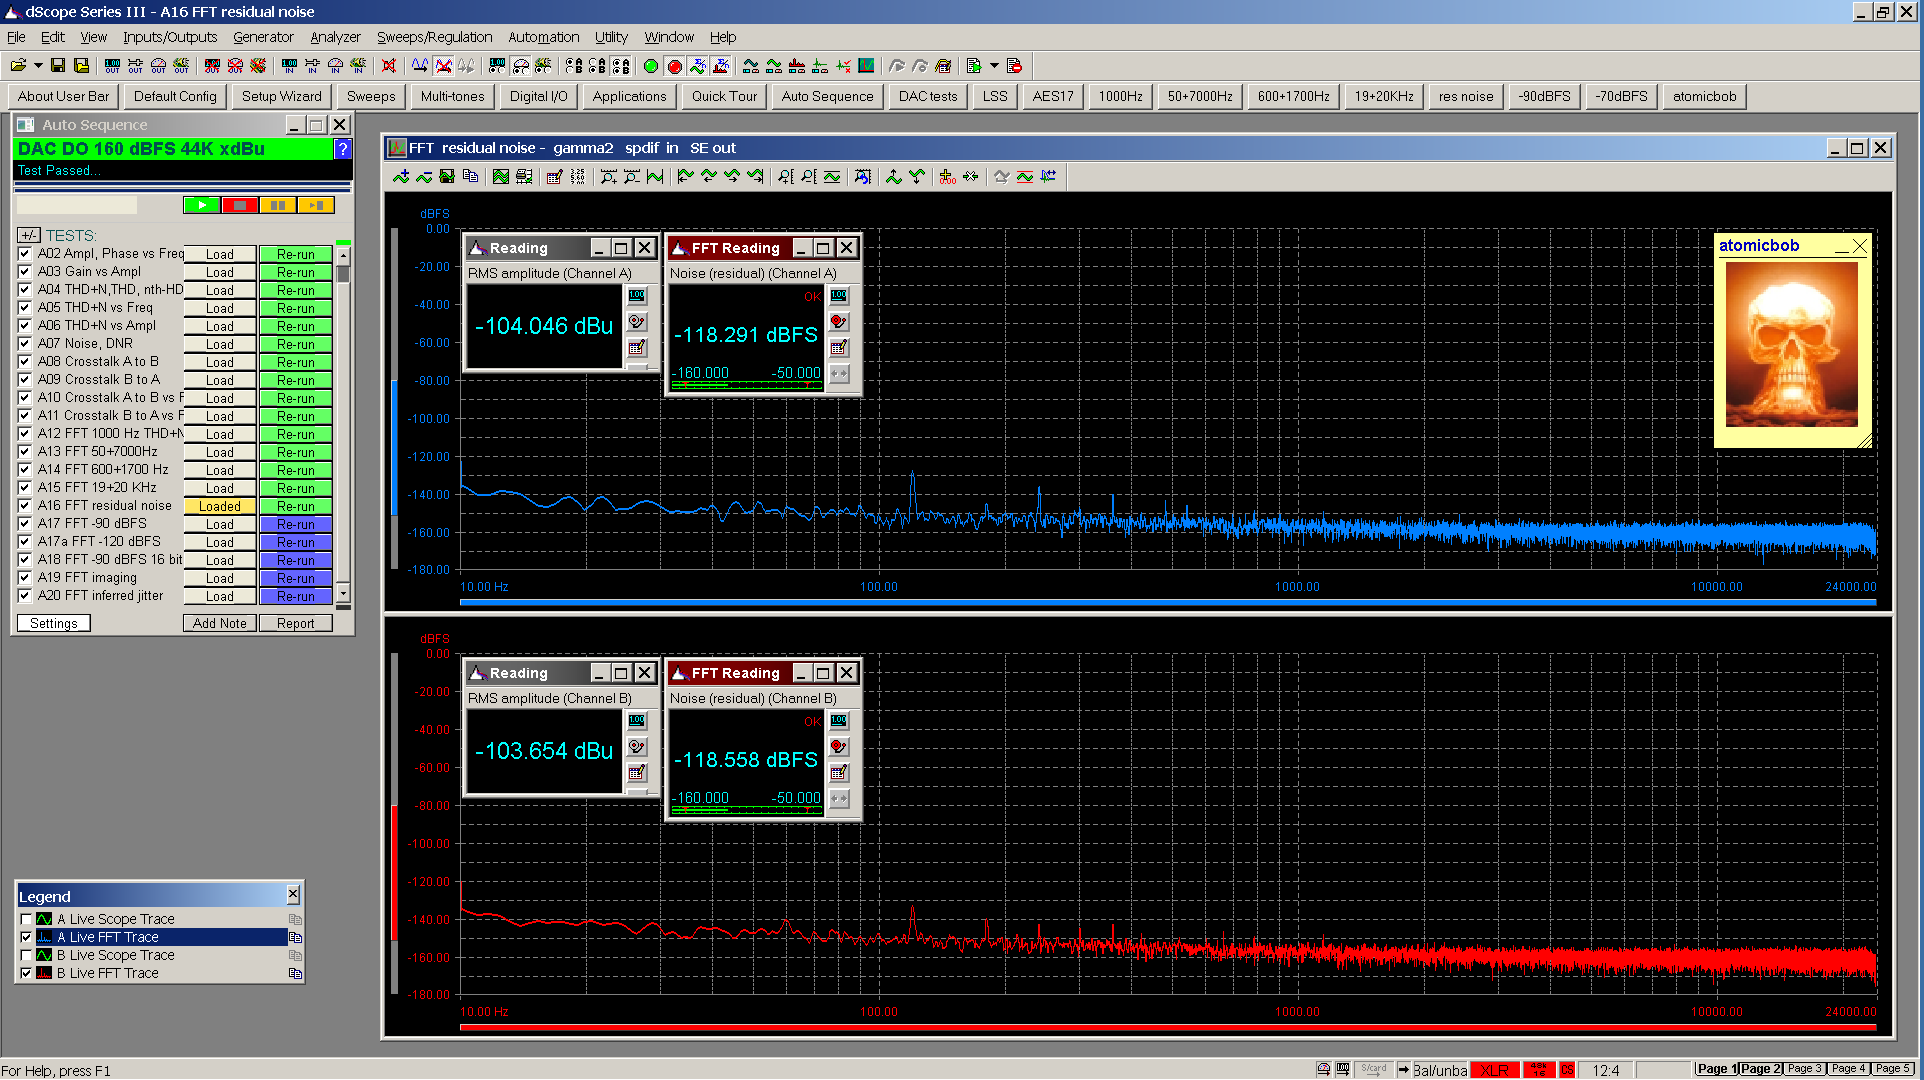 07 20210621 gamma2 residual noise FFT spdif SE - 180 dB range.png